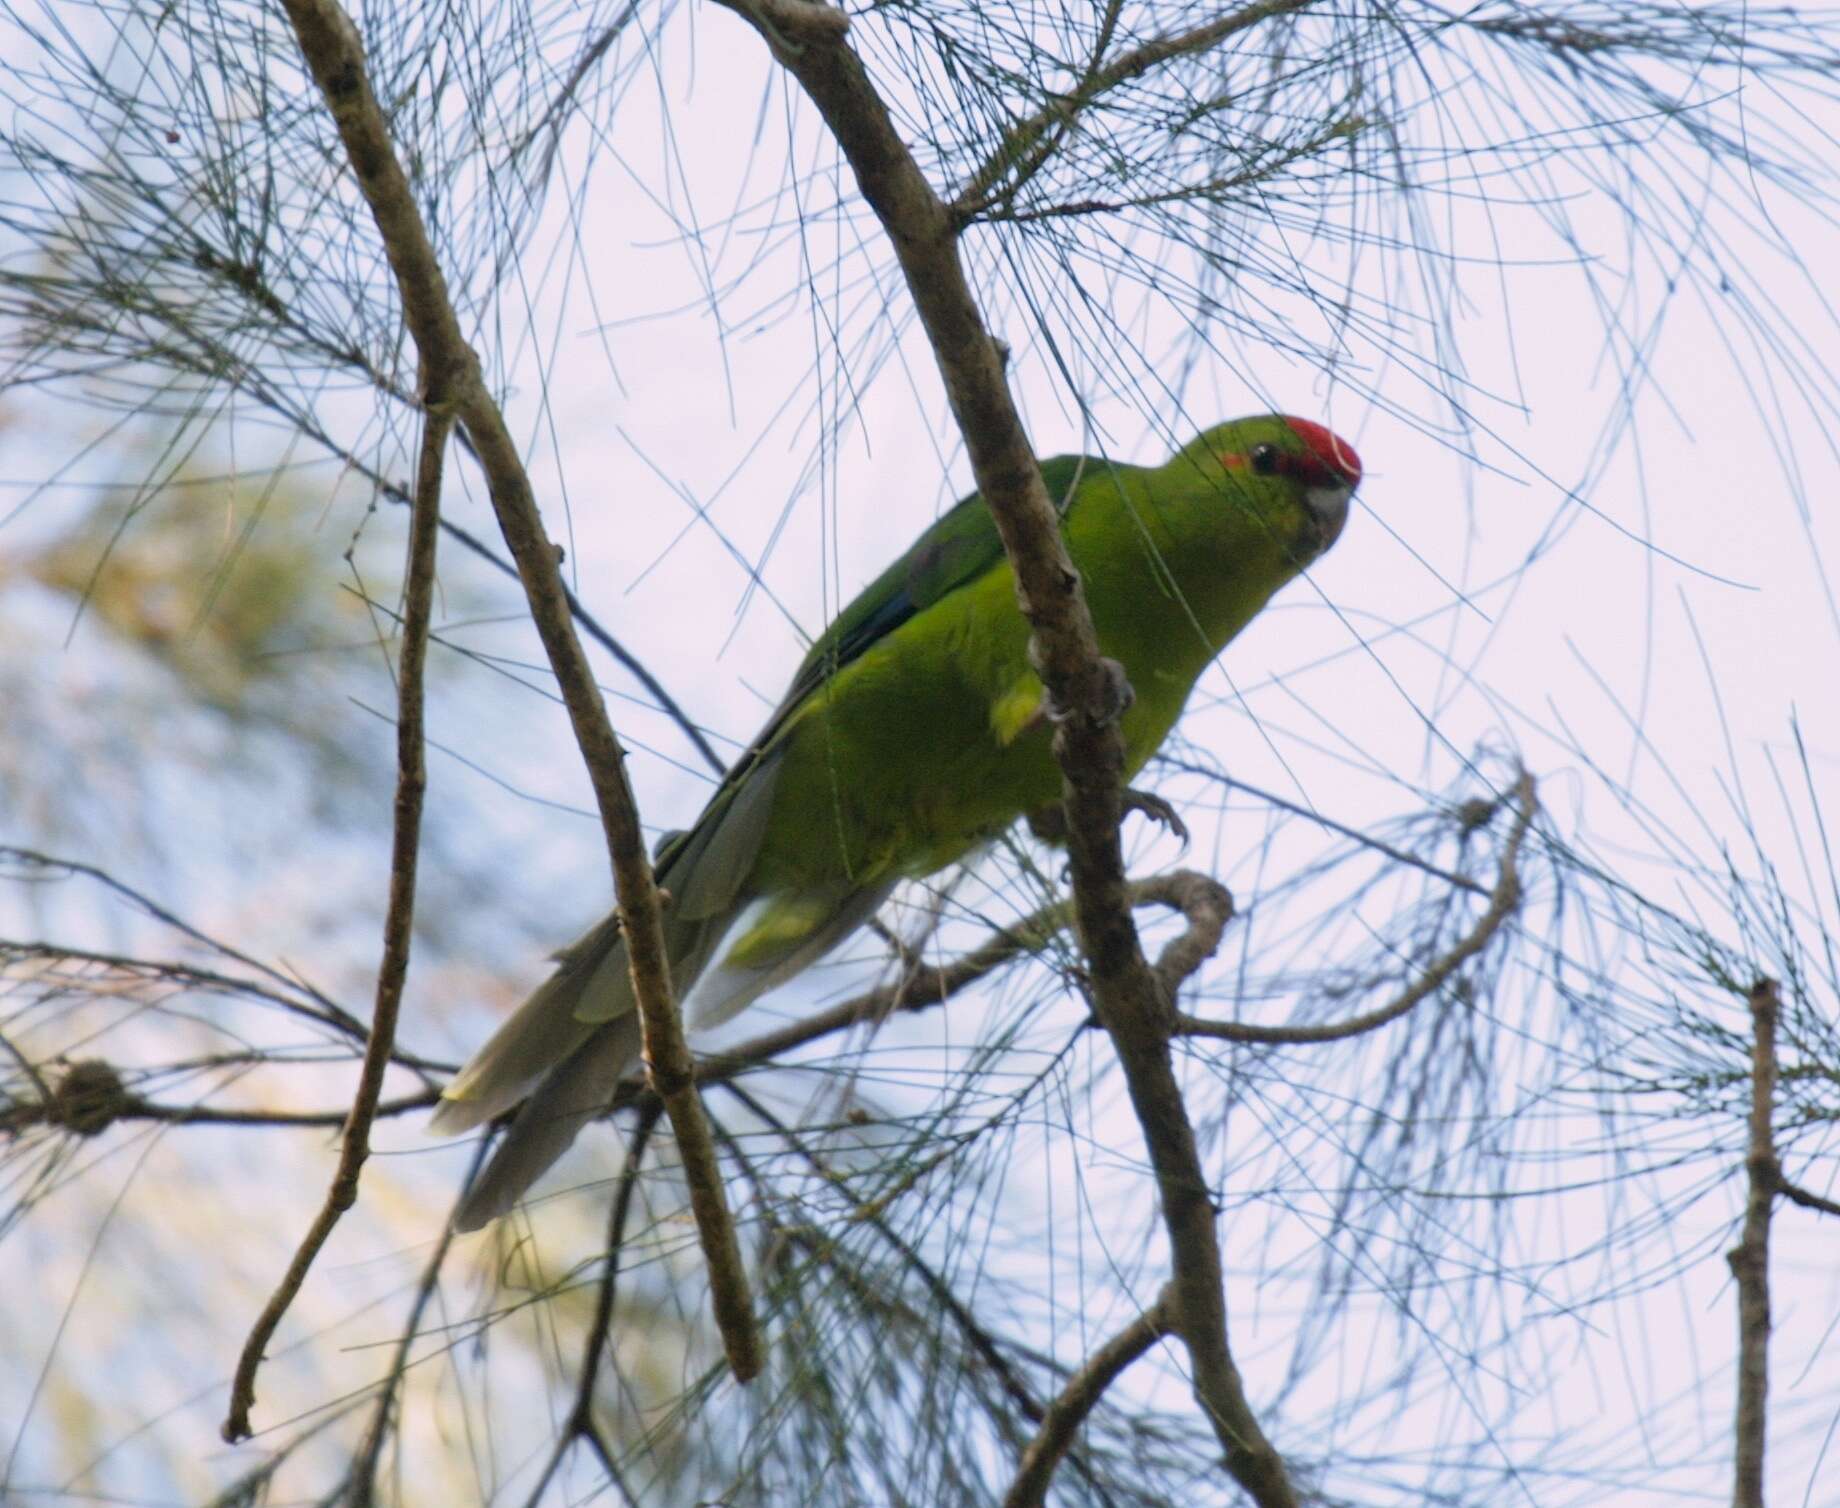 Image of New Caledonian Parakeet